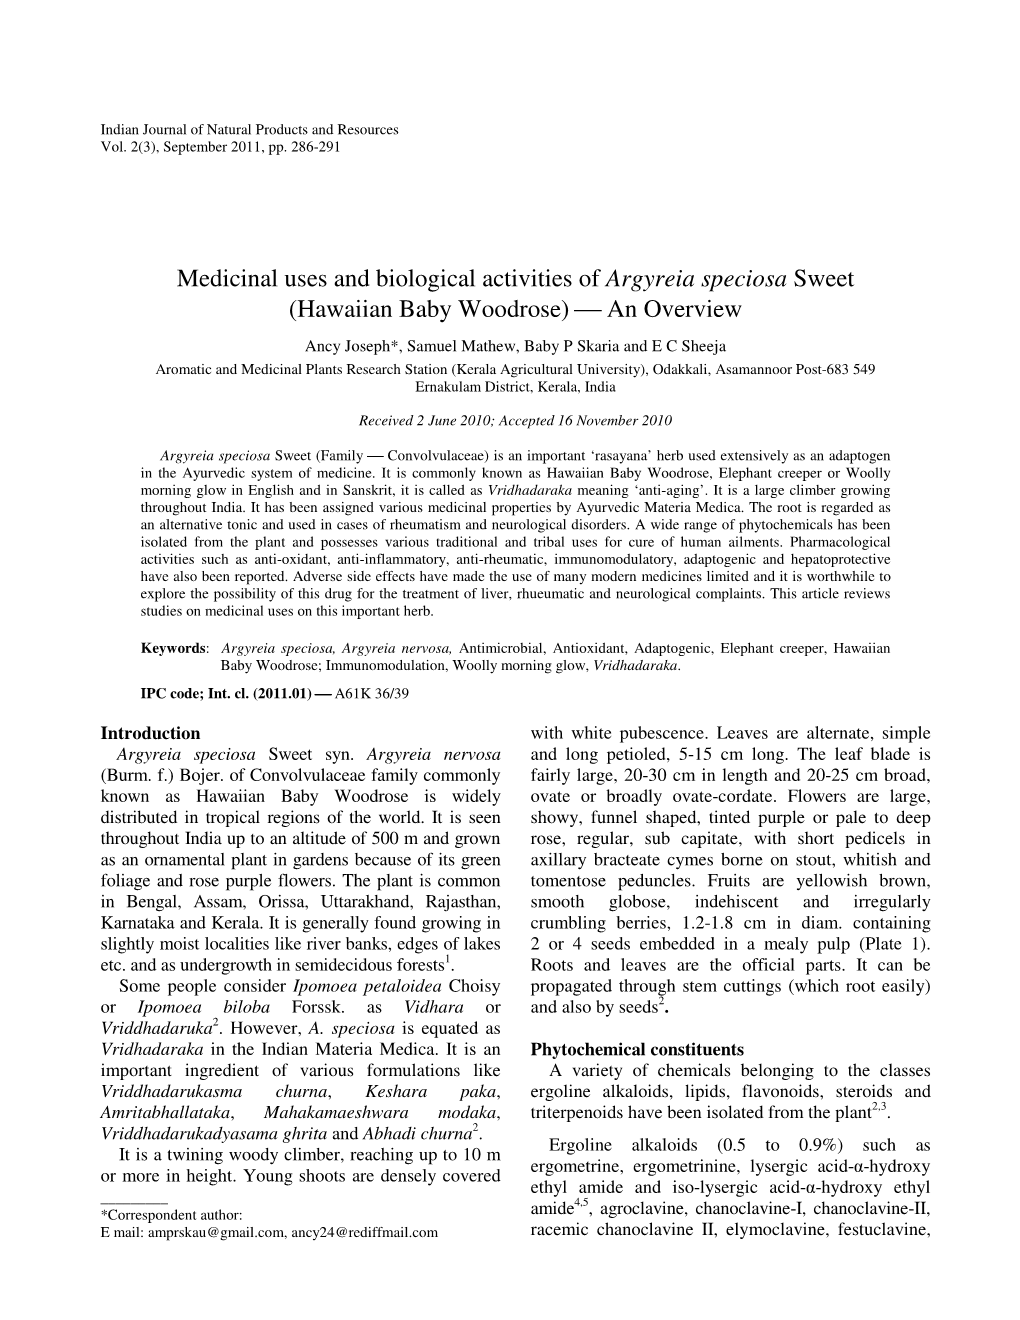 Medicinal Uses and Biological Activities of Argyreia Speciosa